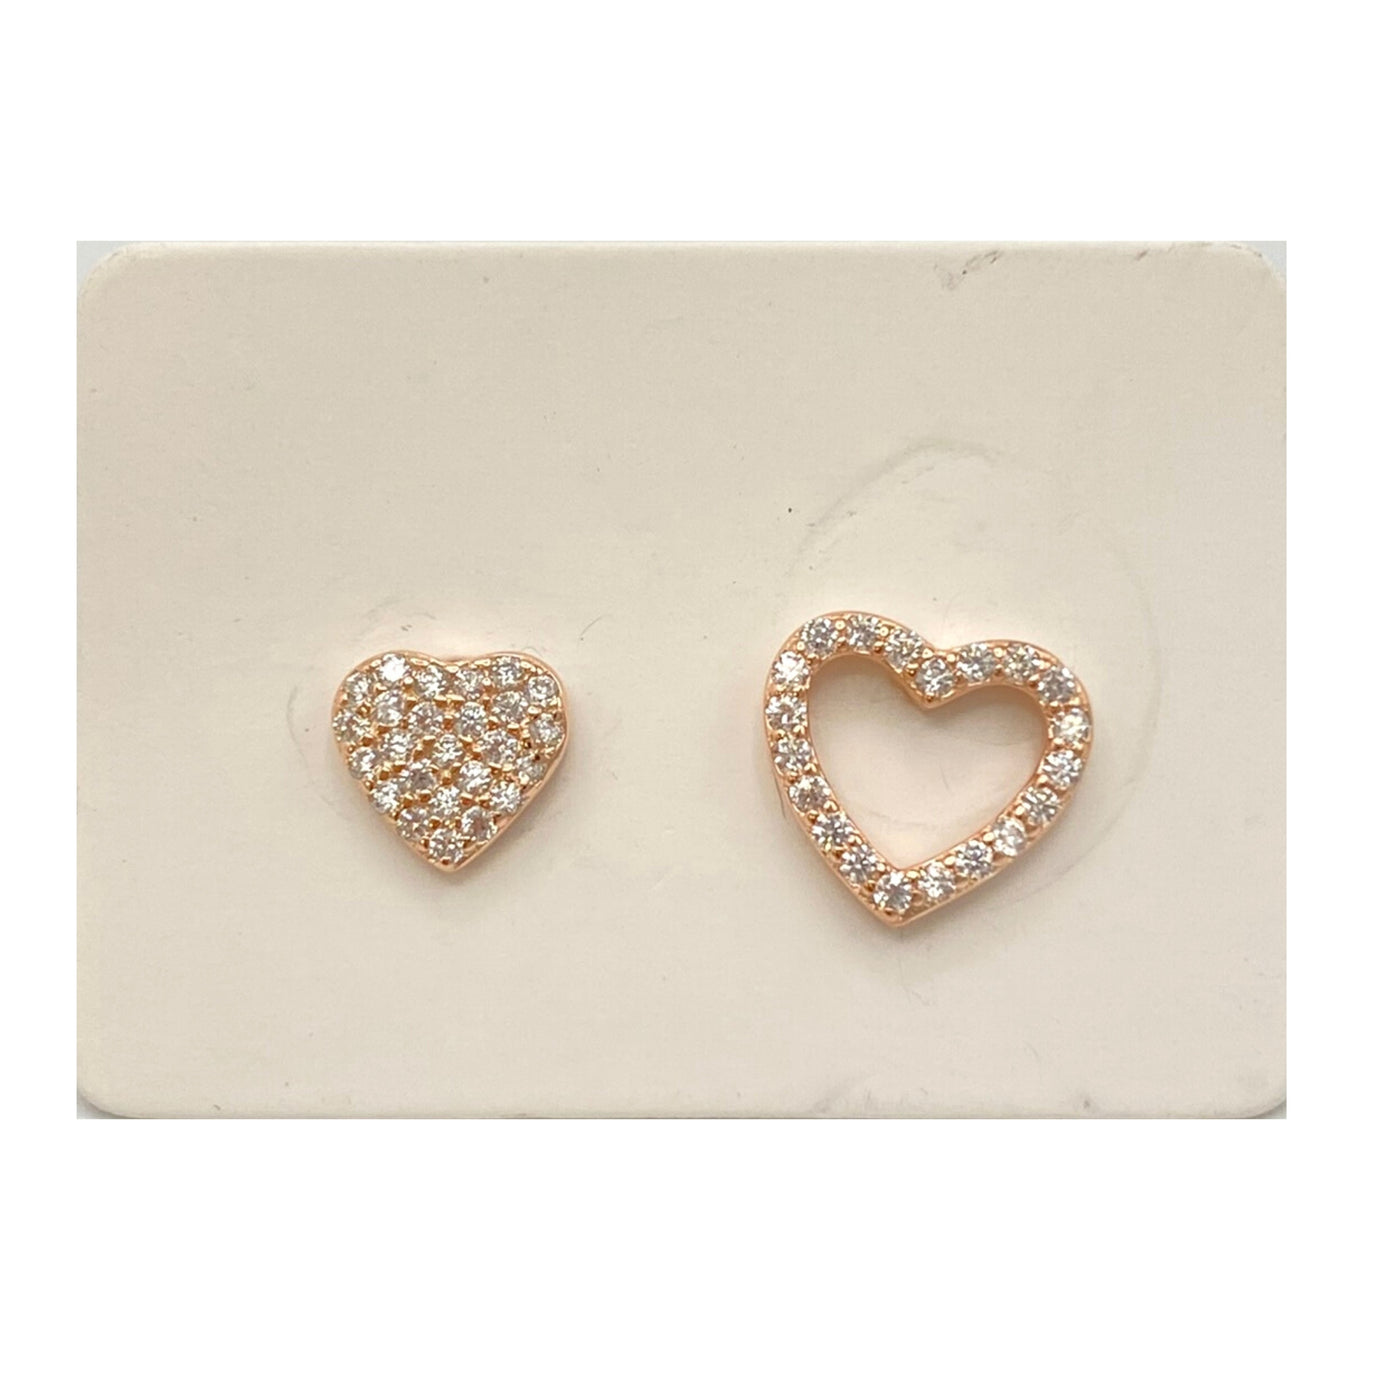 Pack of 5 silver stud heart earrings - 6-9 mm